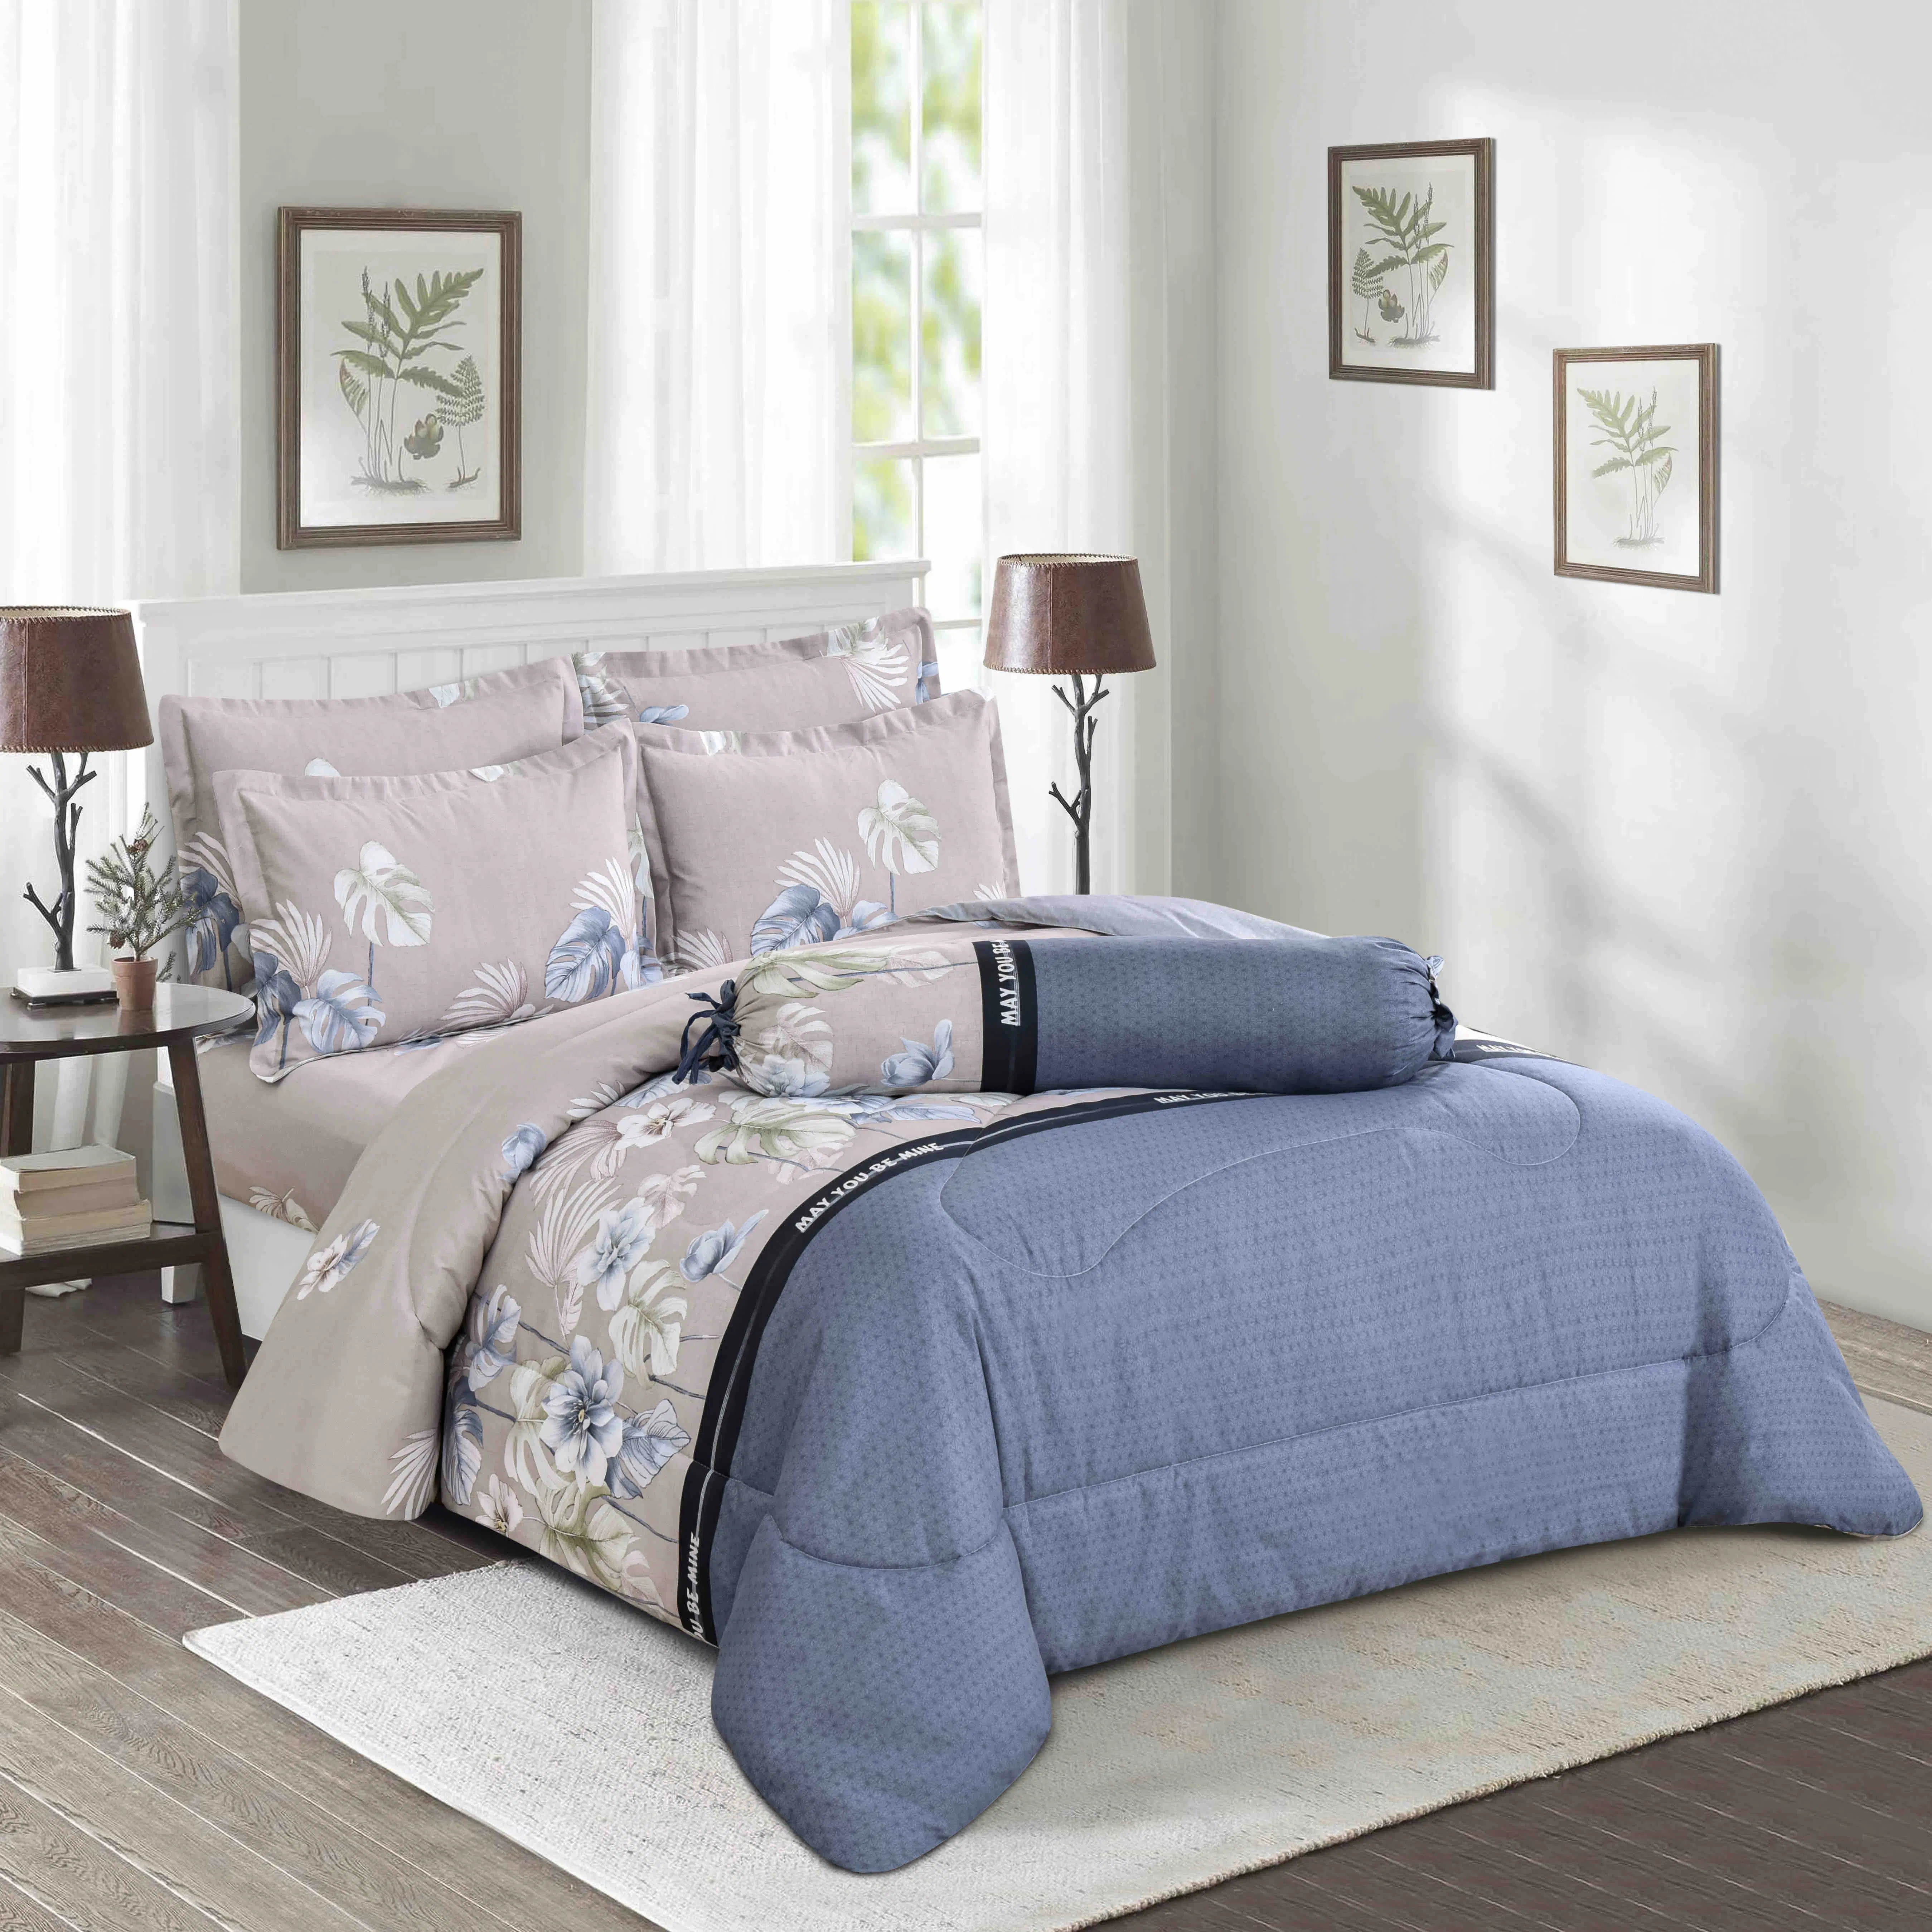 Hotel Home Use poliéster King tamanho cama Roupa Comforter conjunto Microfibra 7 em 1 acolchoado bedspread tecido cama escovado Cama de casal Quilt macio